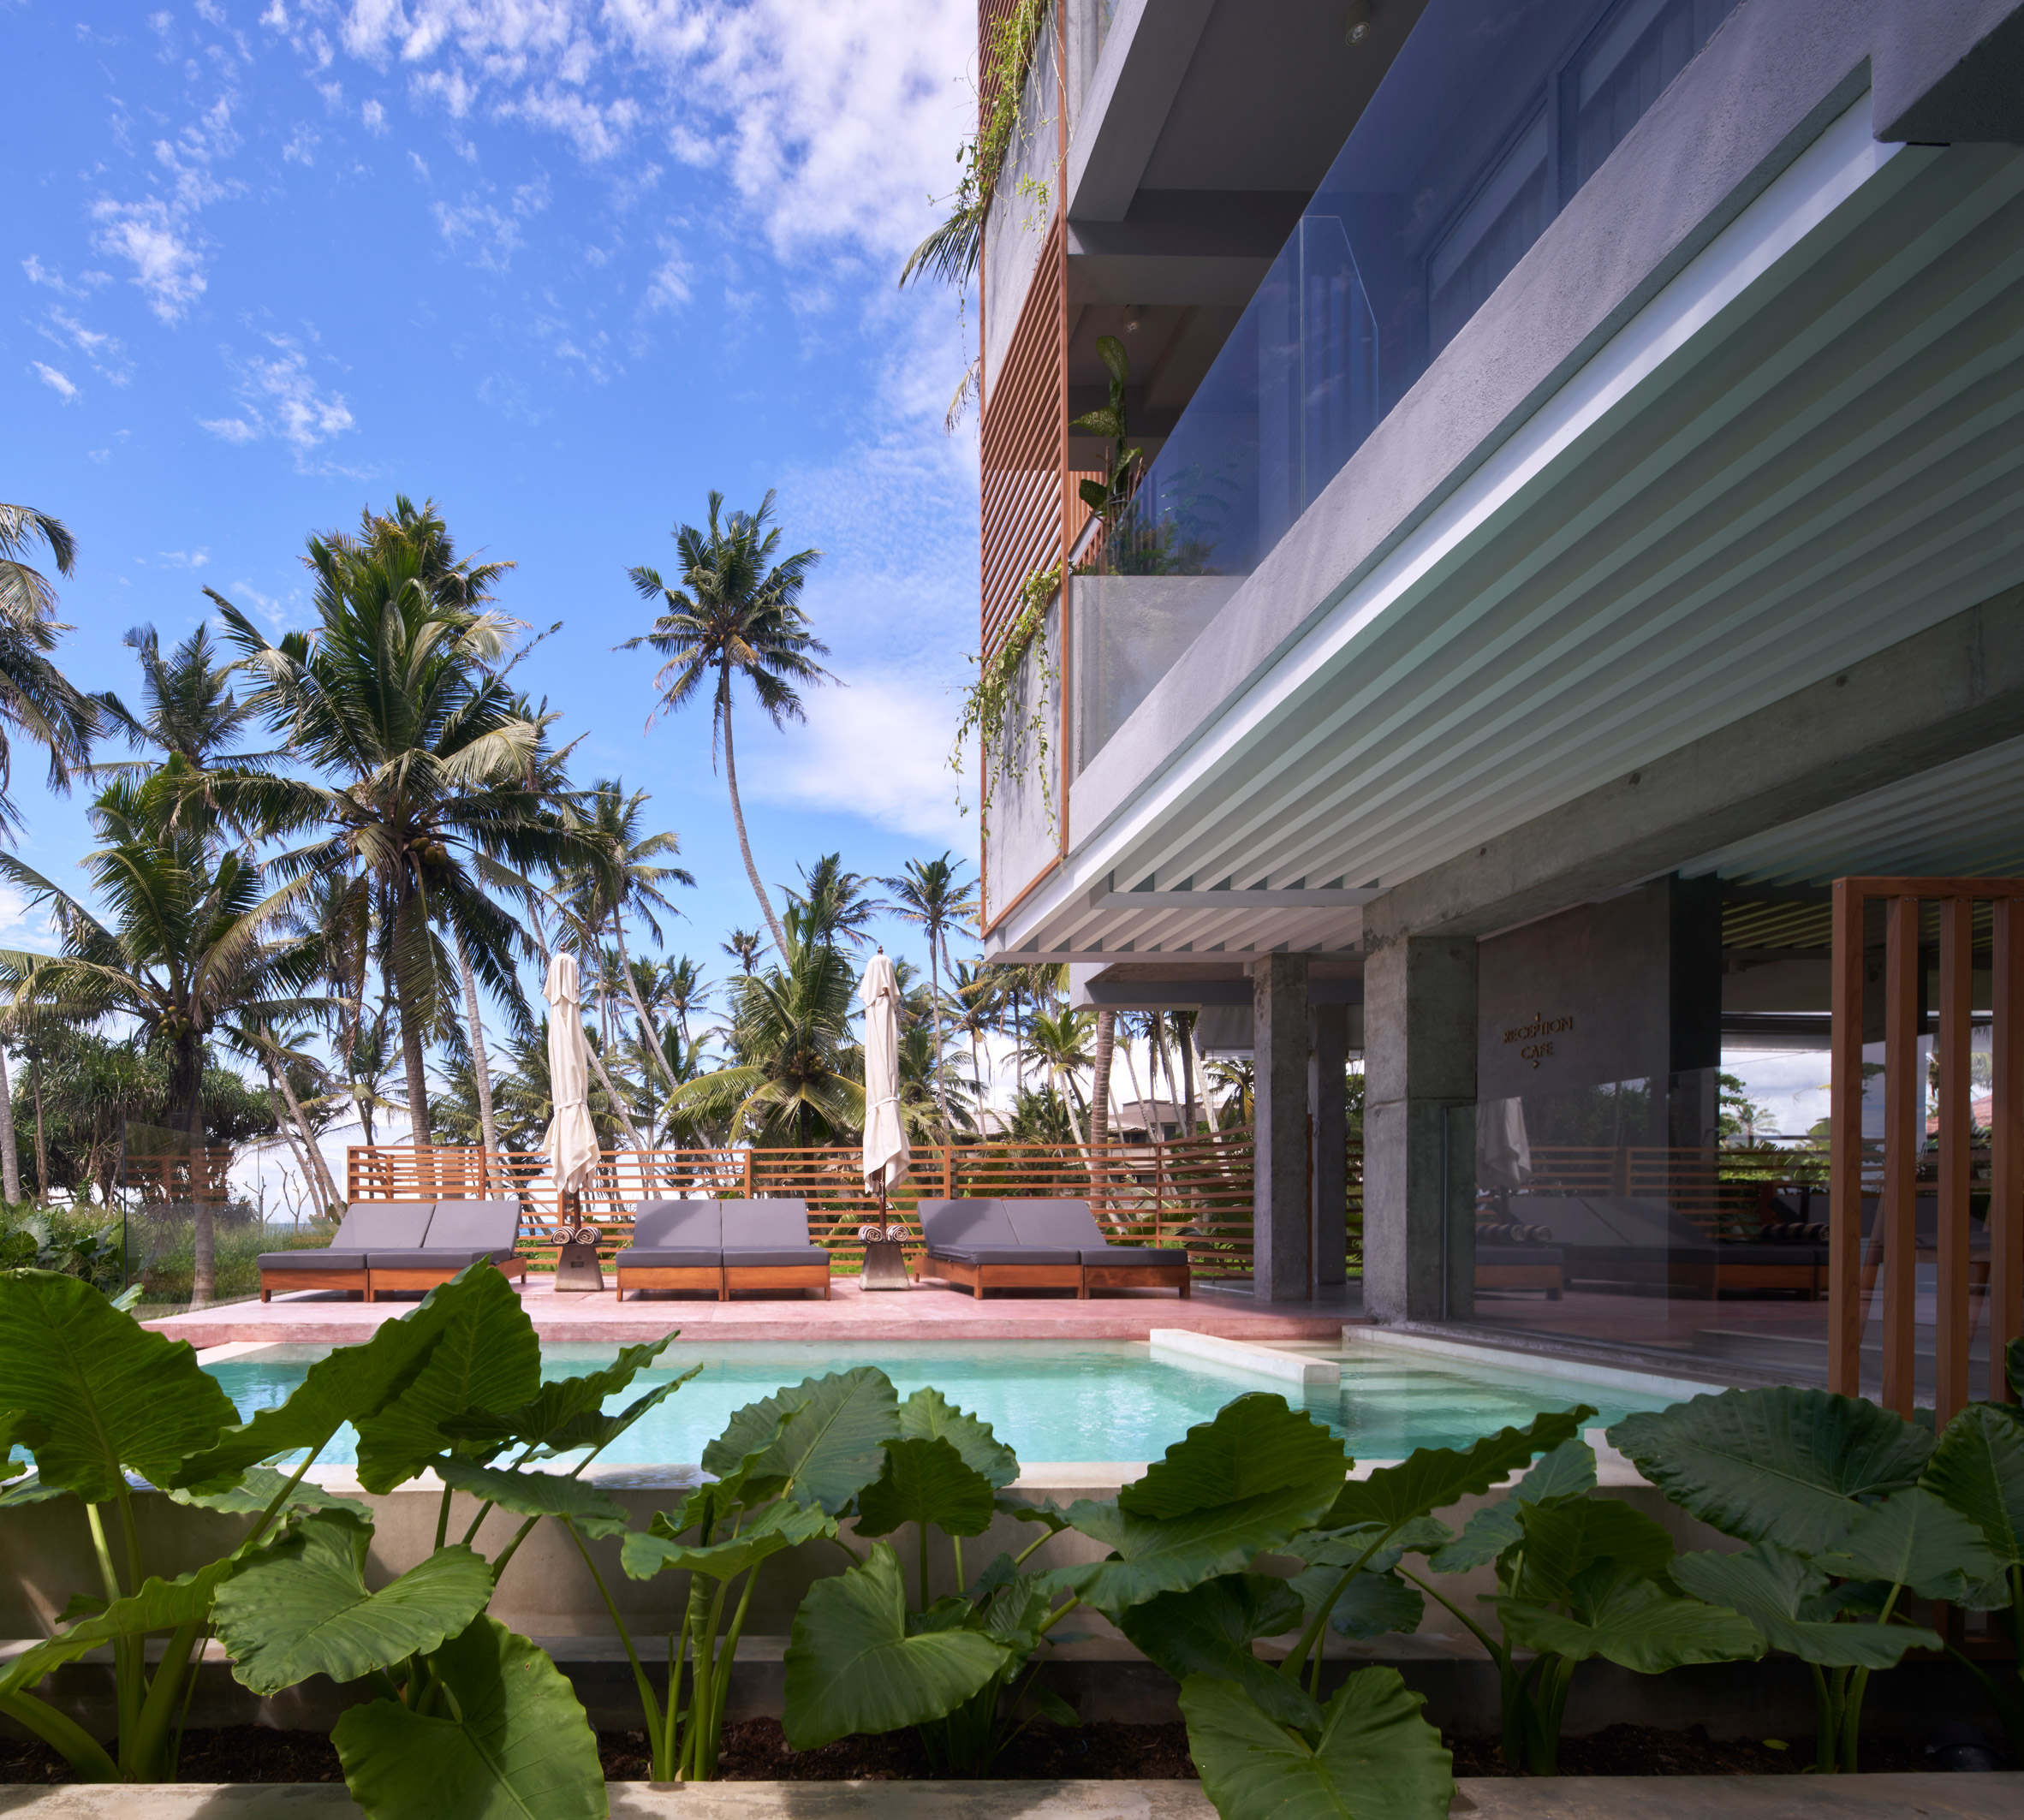 Pool outside a tropical hotel